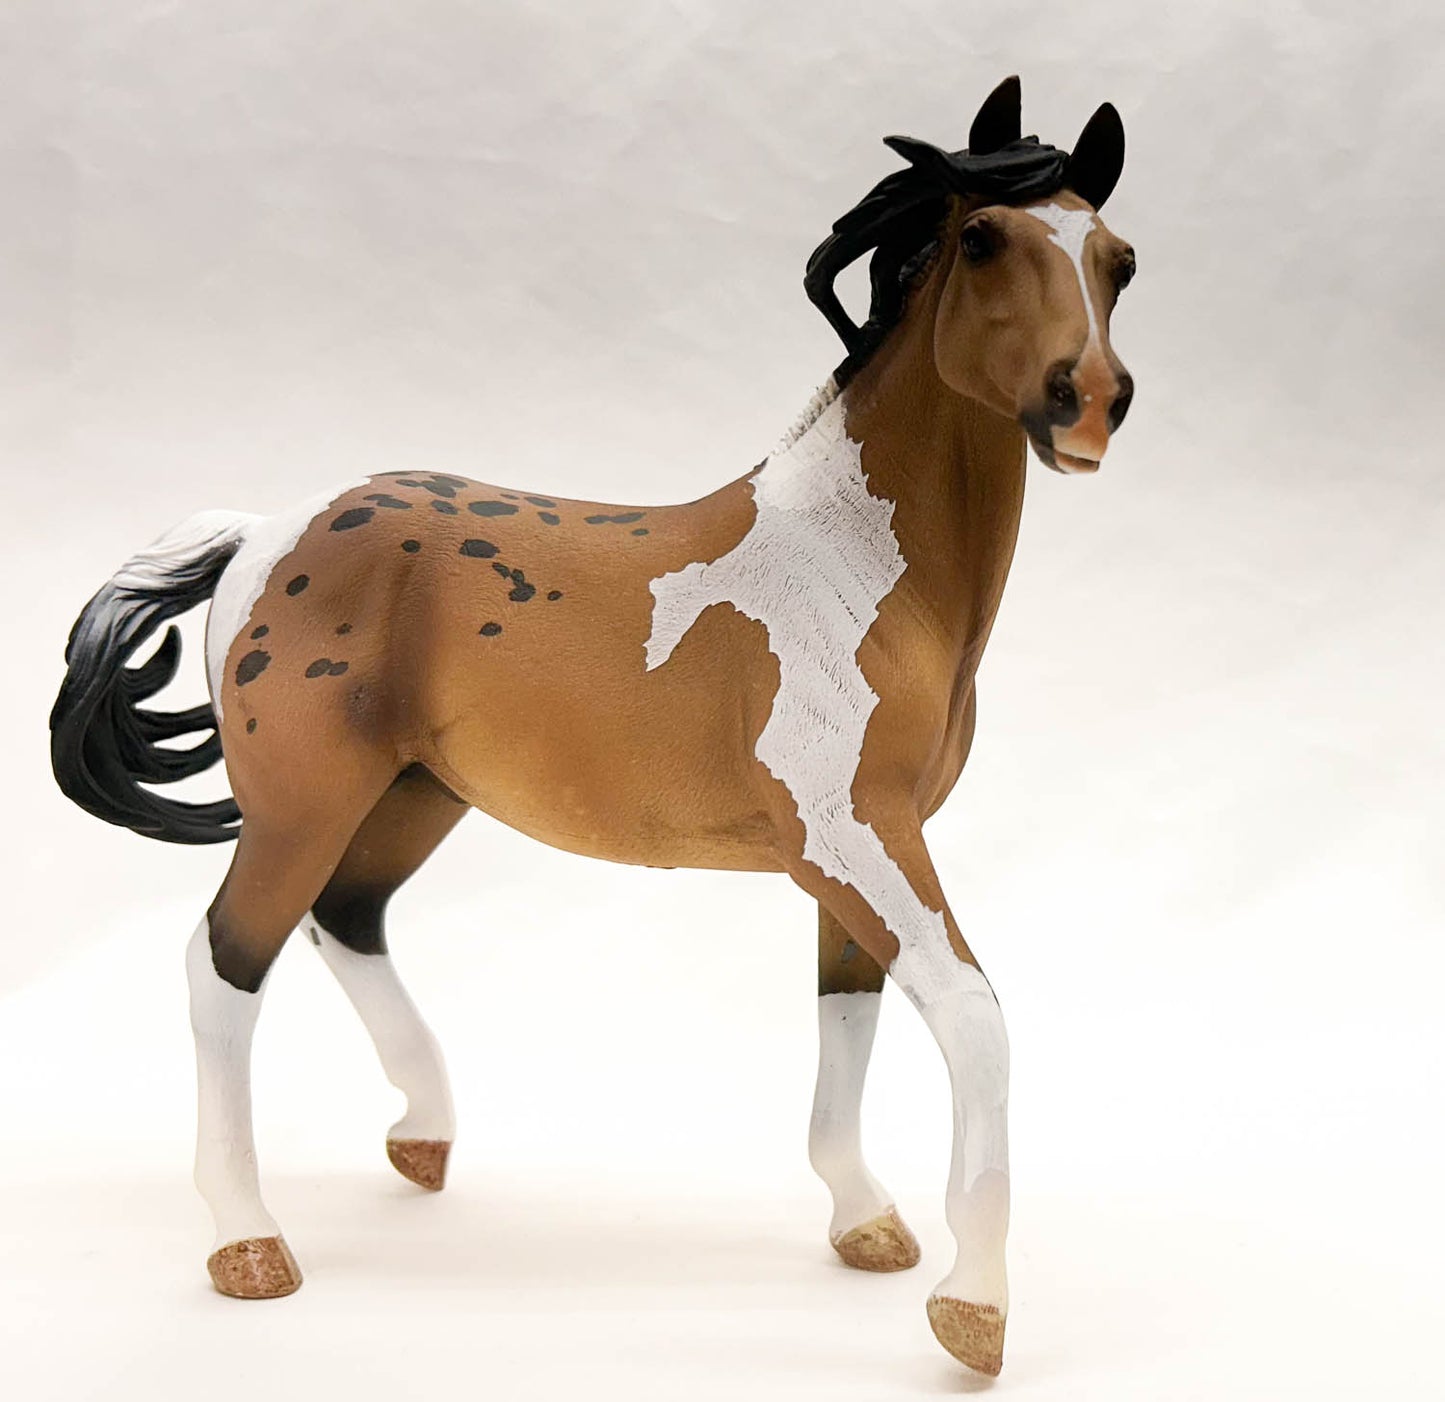 Mustang Stallion, Bay Pintaloosa - Deluxe 1:12 Scale Model (International Release)